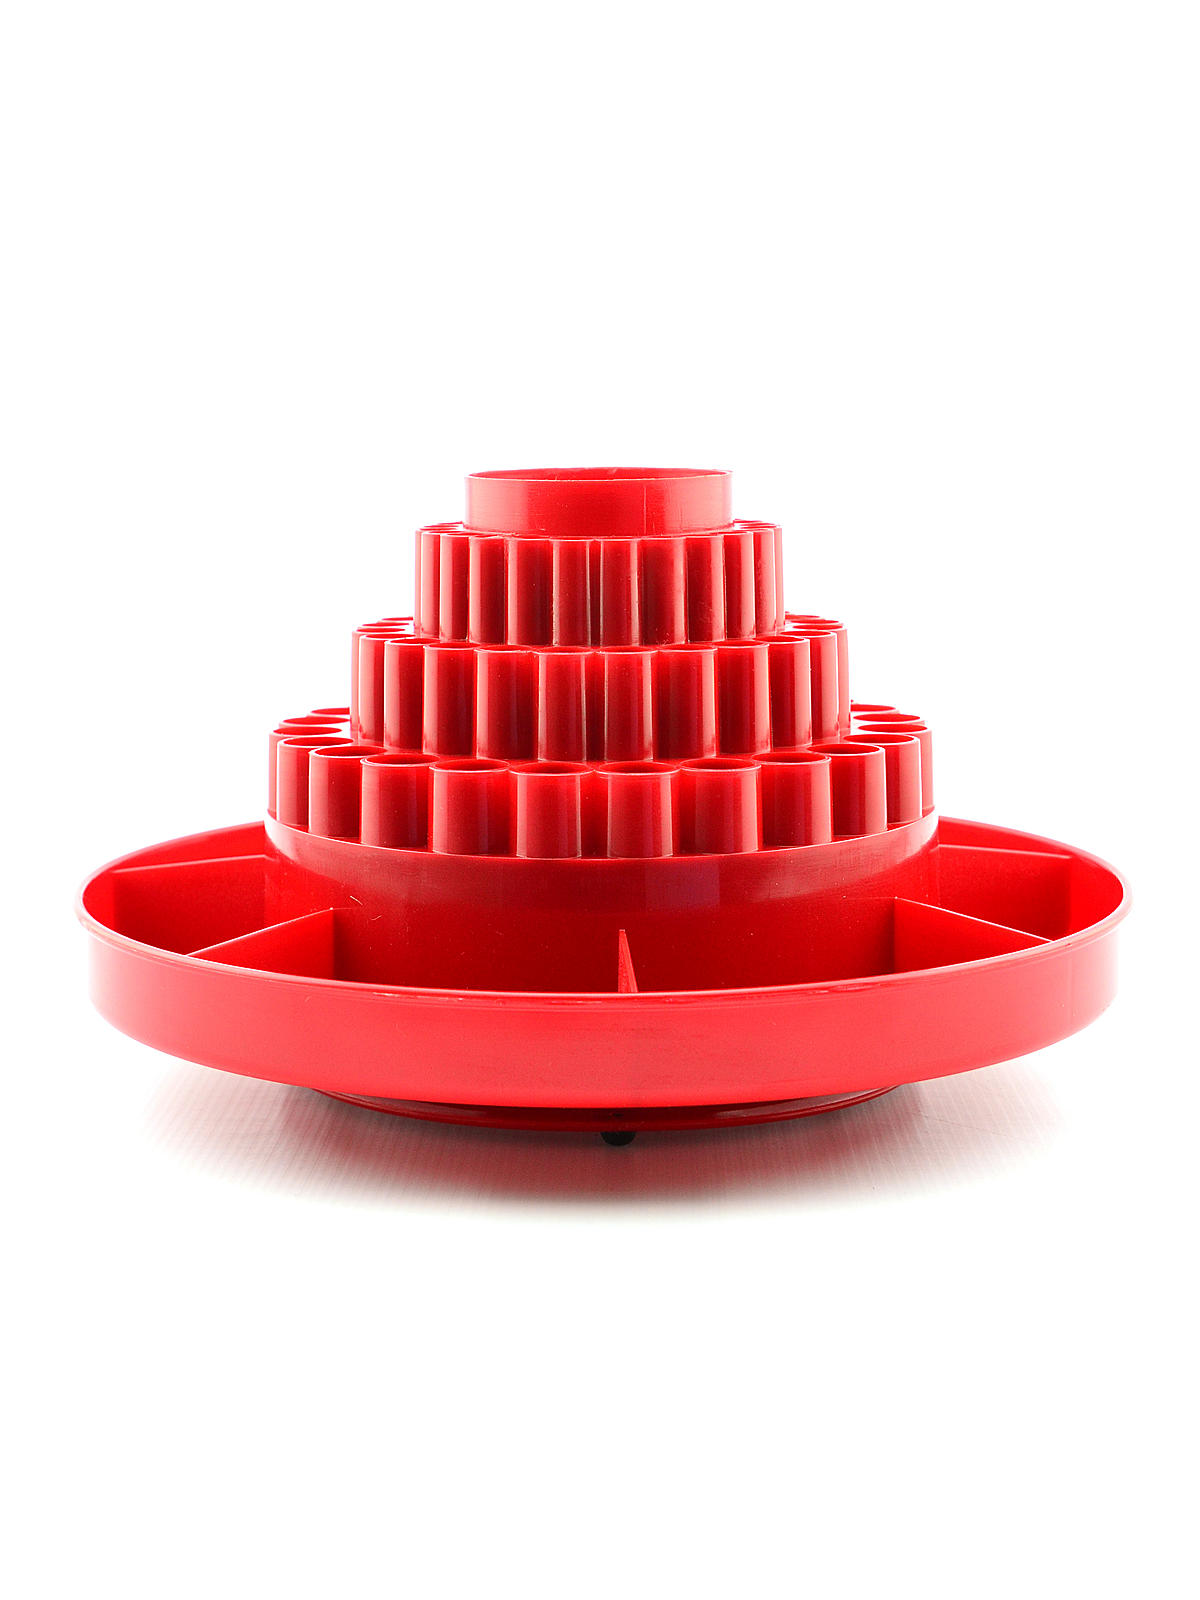 Spin-o-tray Rotating Desktop Organizer Red